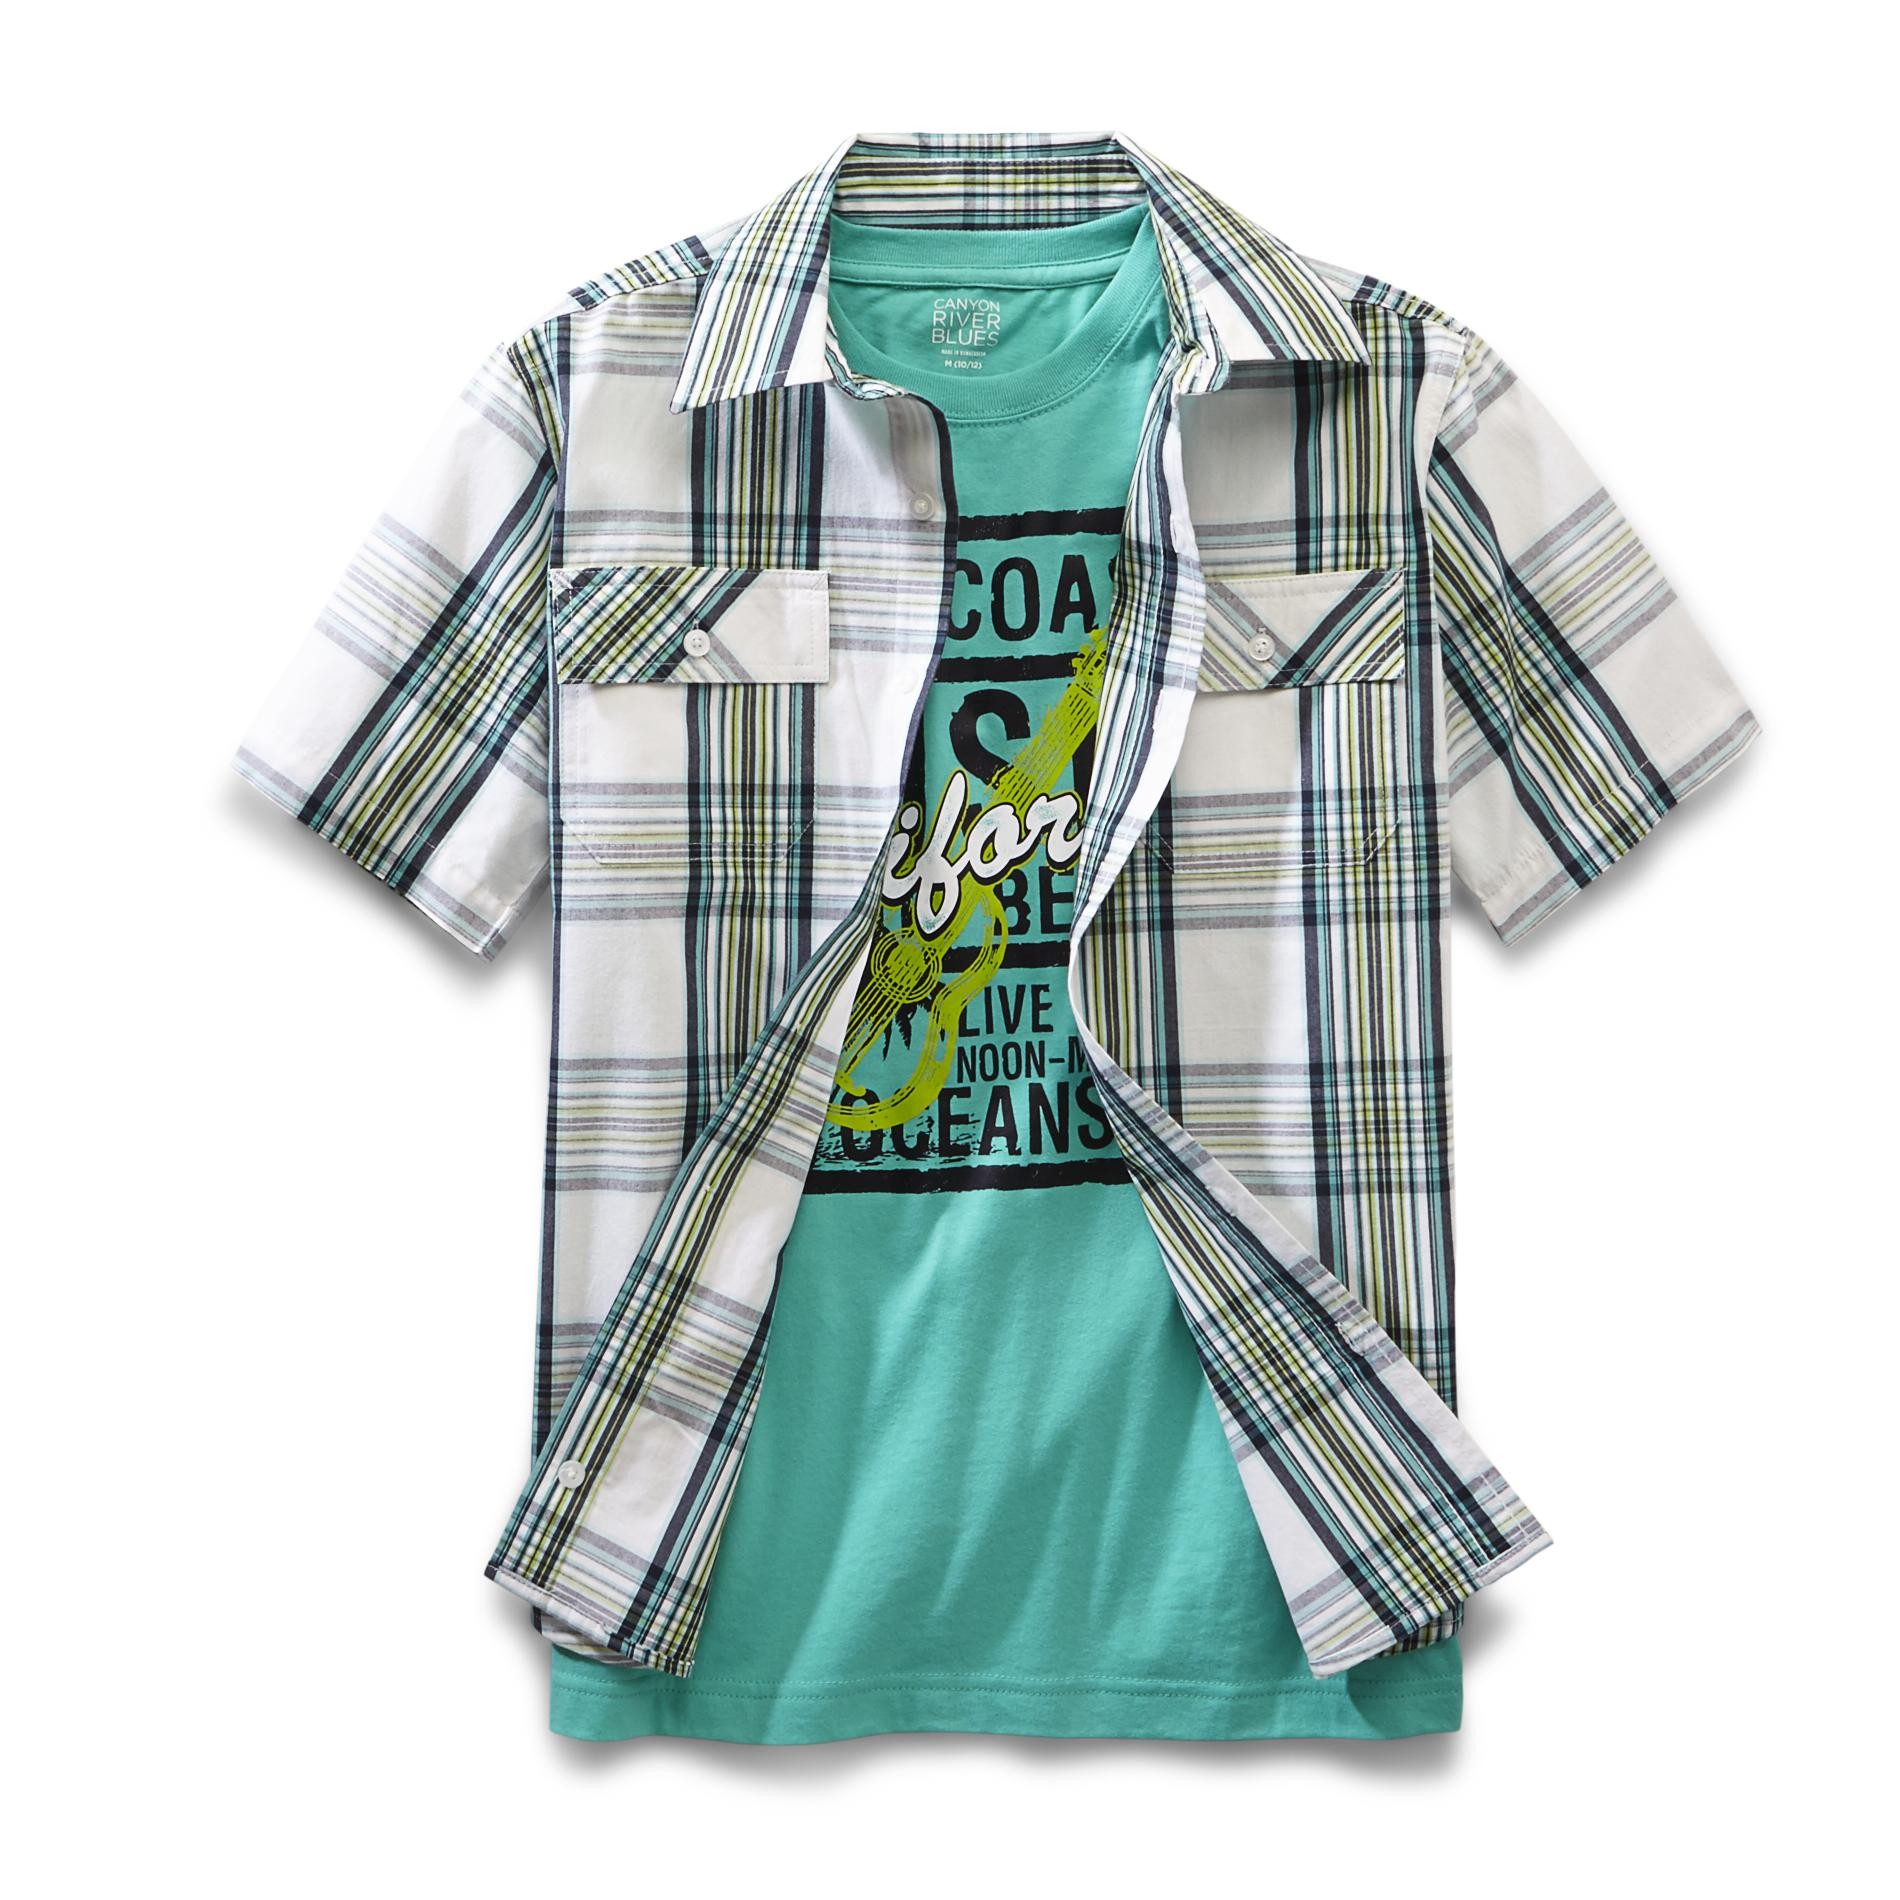 Canyon River Blues Boy's T-Shirt & Dress Shirt - Plaid